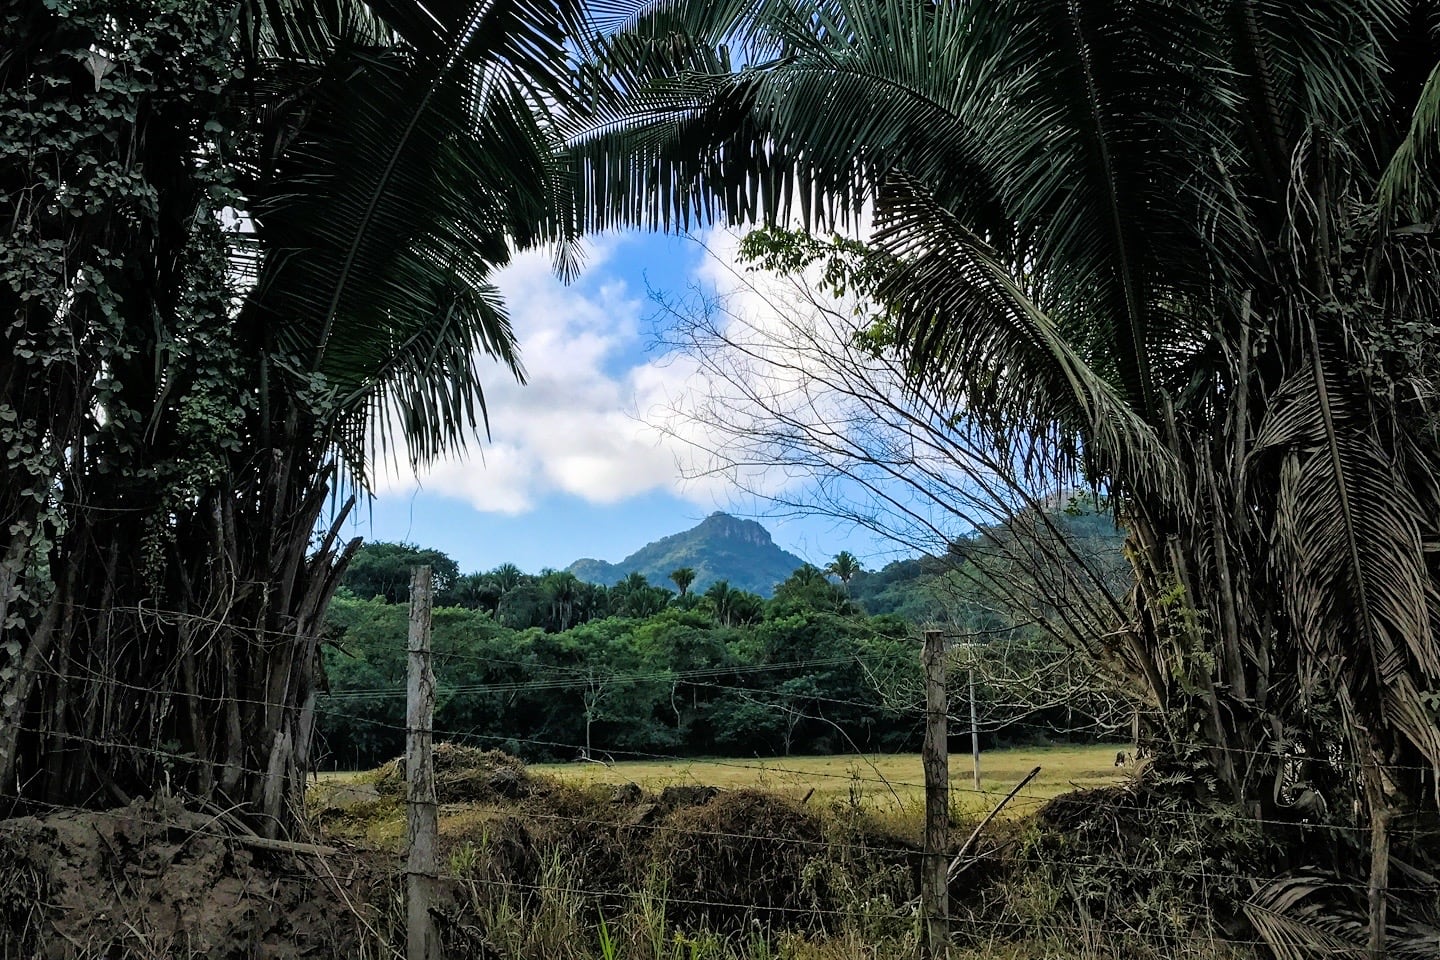 Monkey Mountain with palm trees